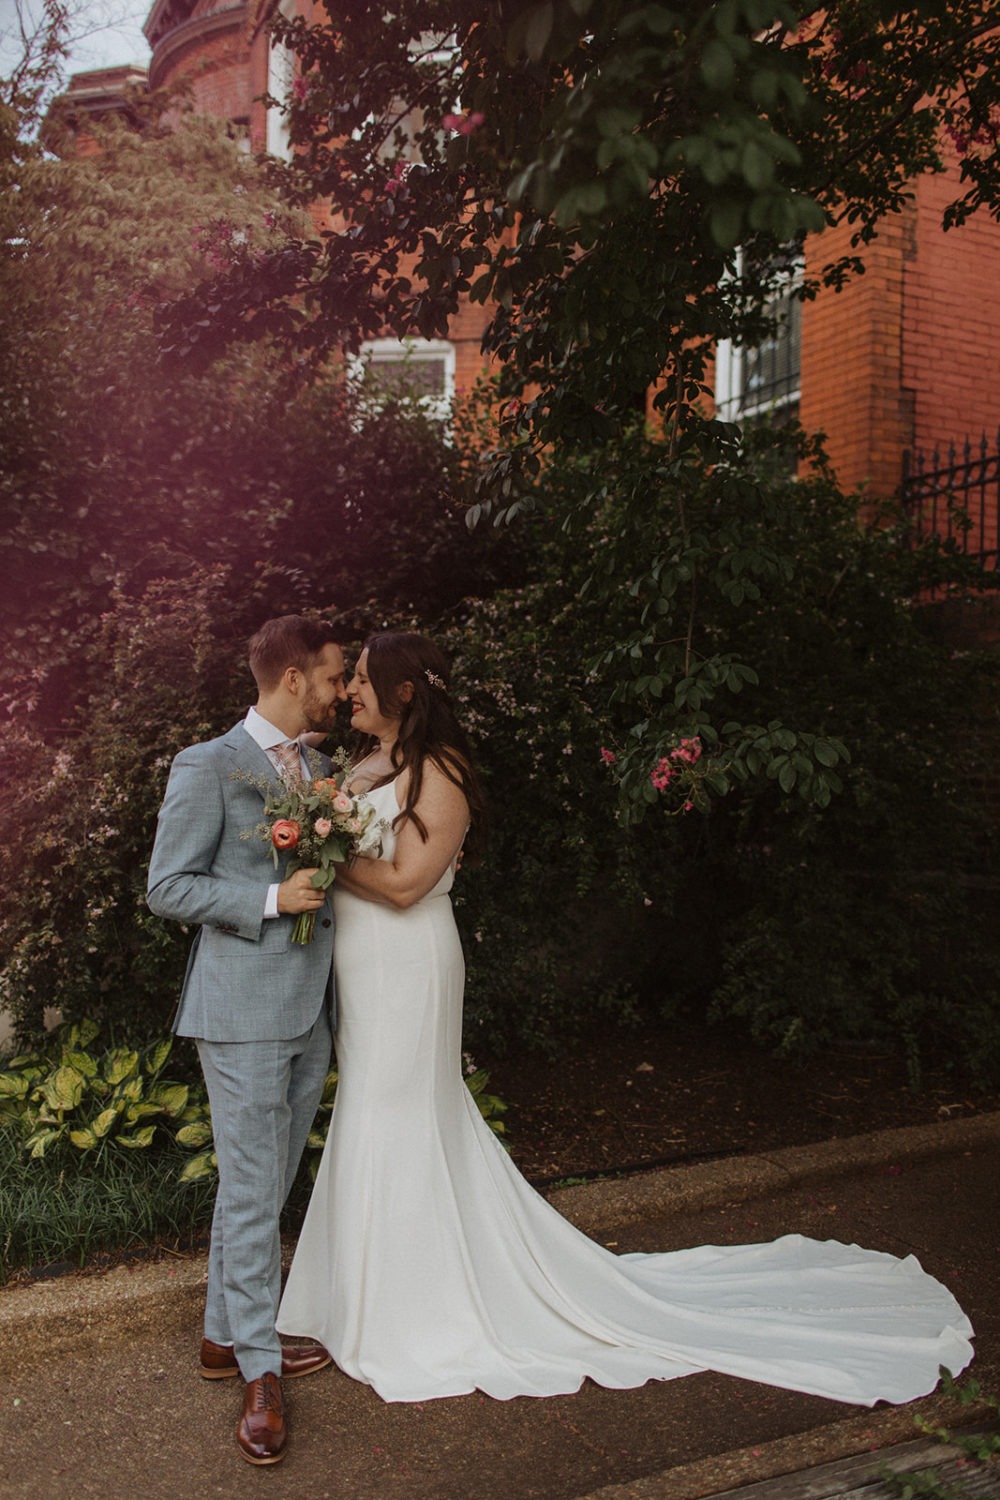 Couple embraces holding wedding bouquet on DC street 